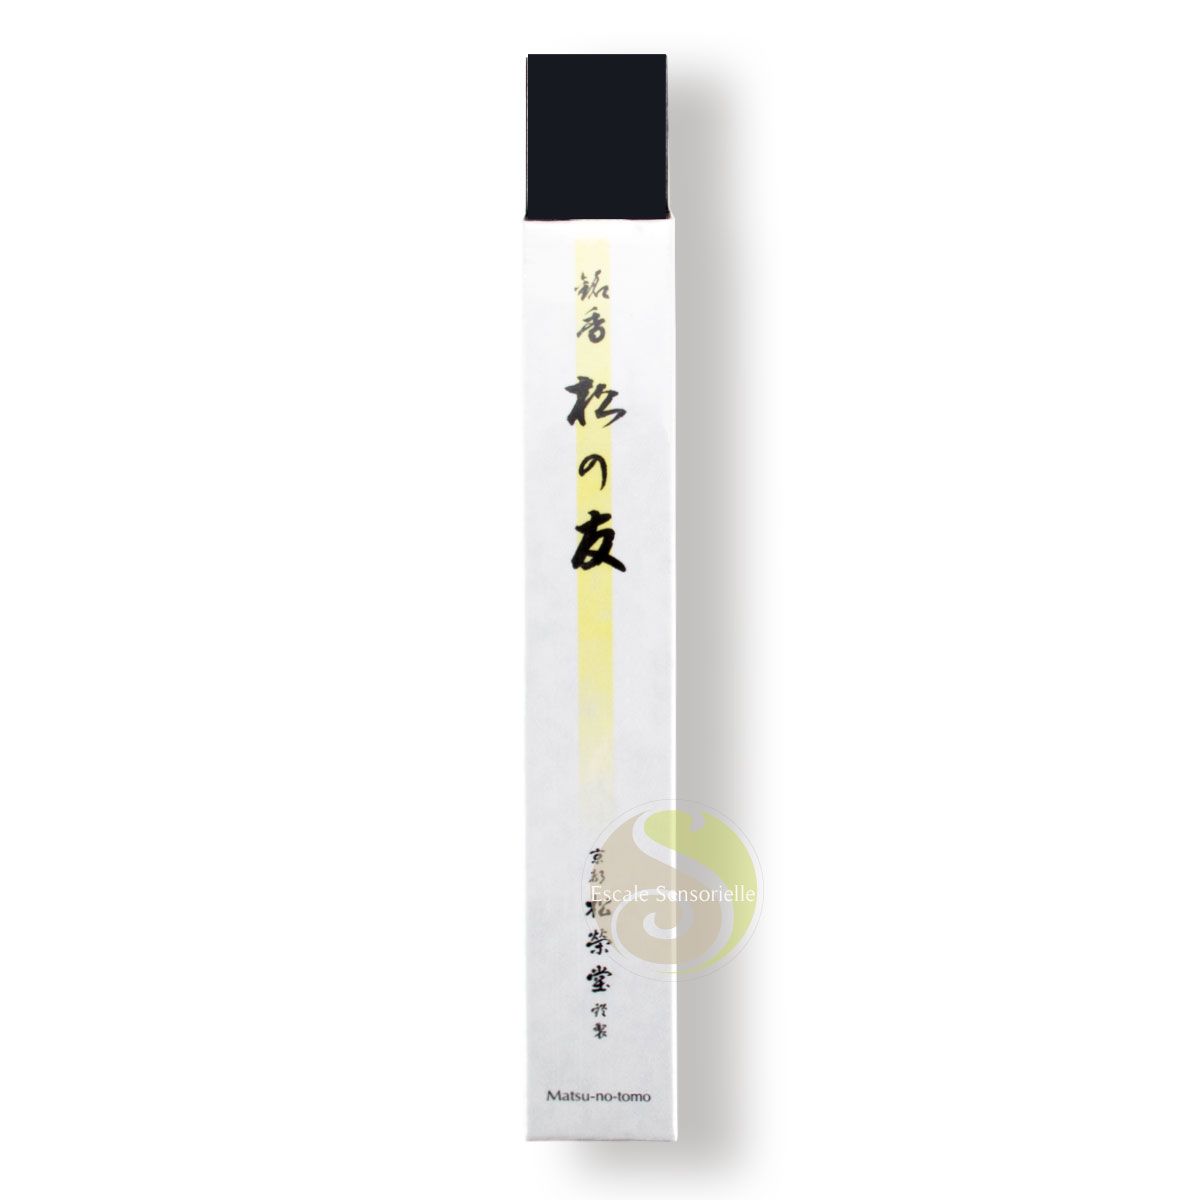 Matsu-no-tomo (Friend of pine) Shoyeido encens premium japonais